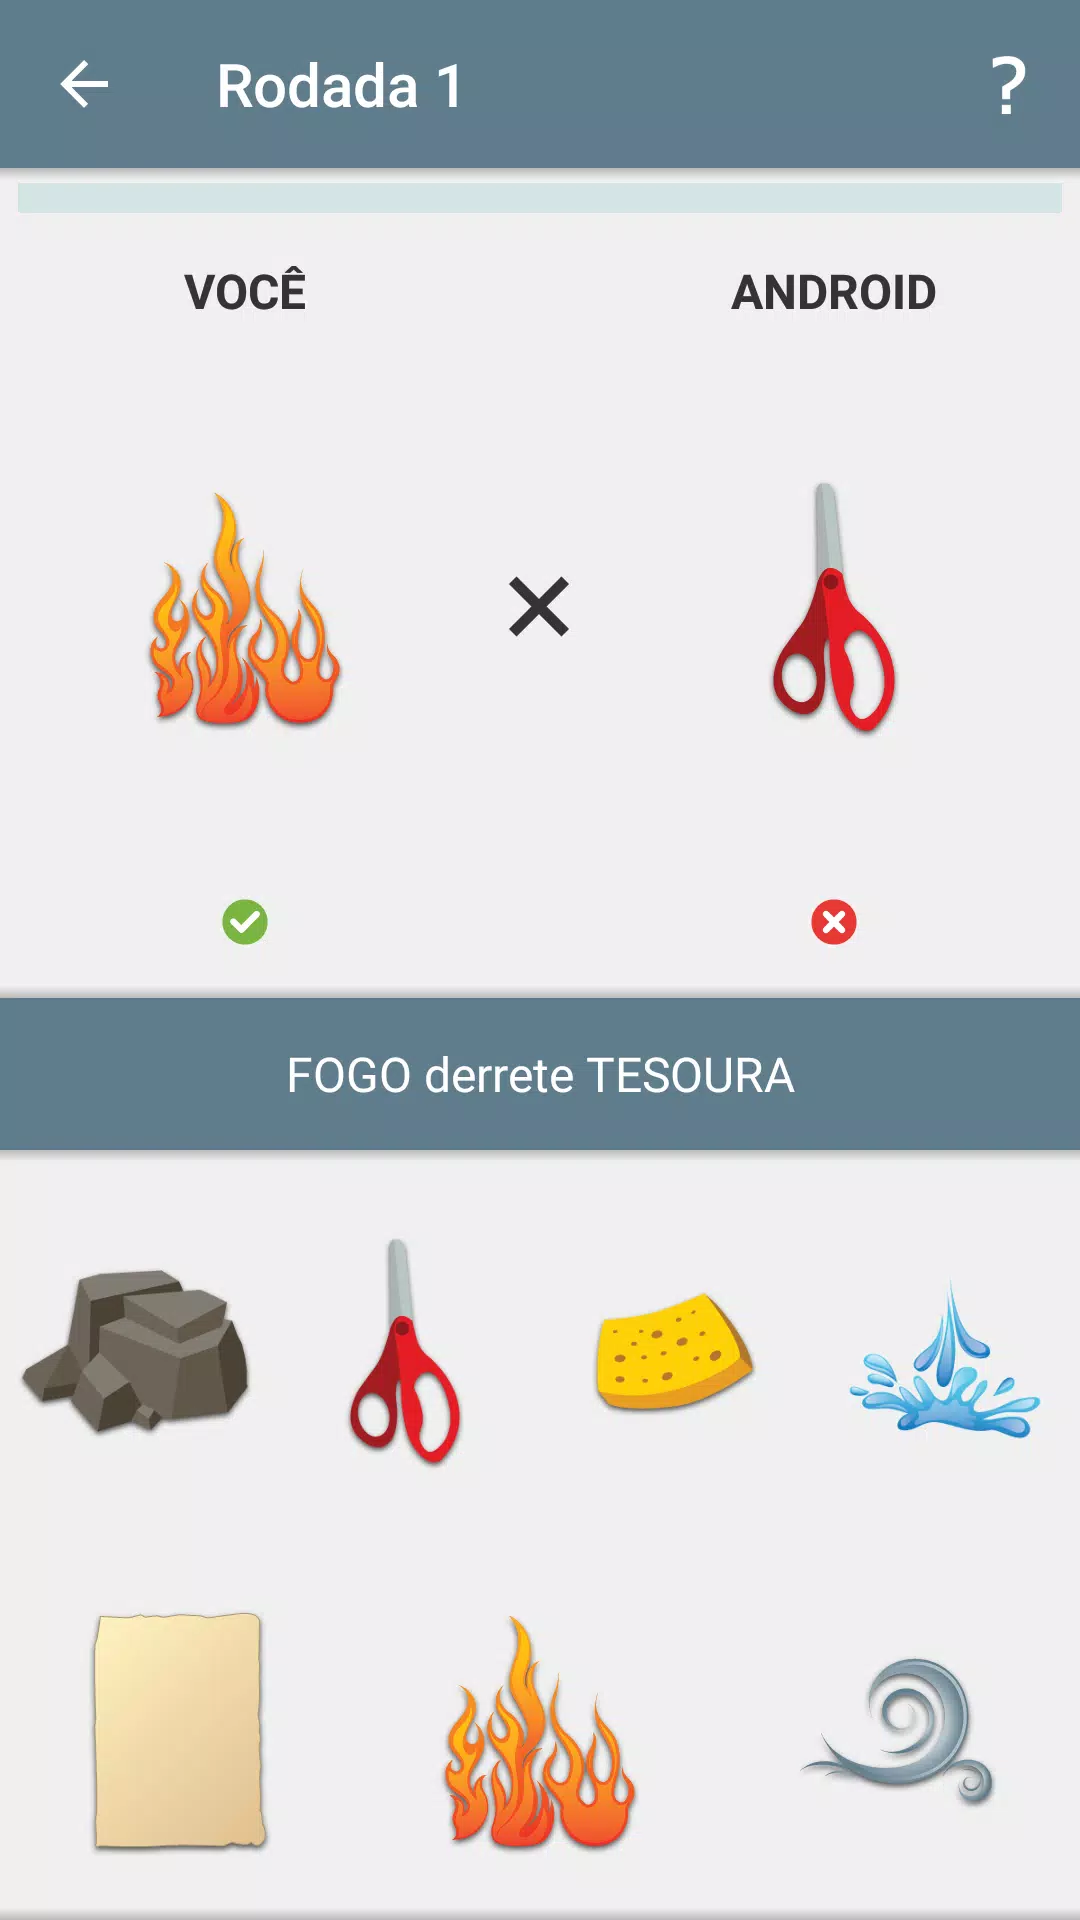 Joquempô Pedra, Papel, Tesoura APK for Android Download